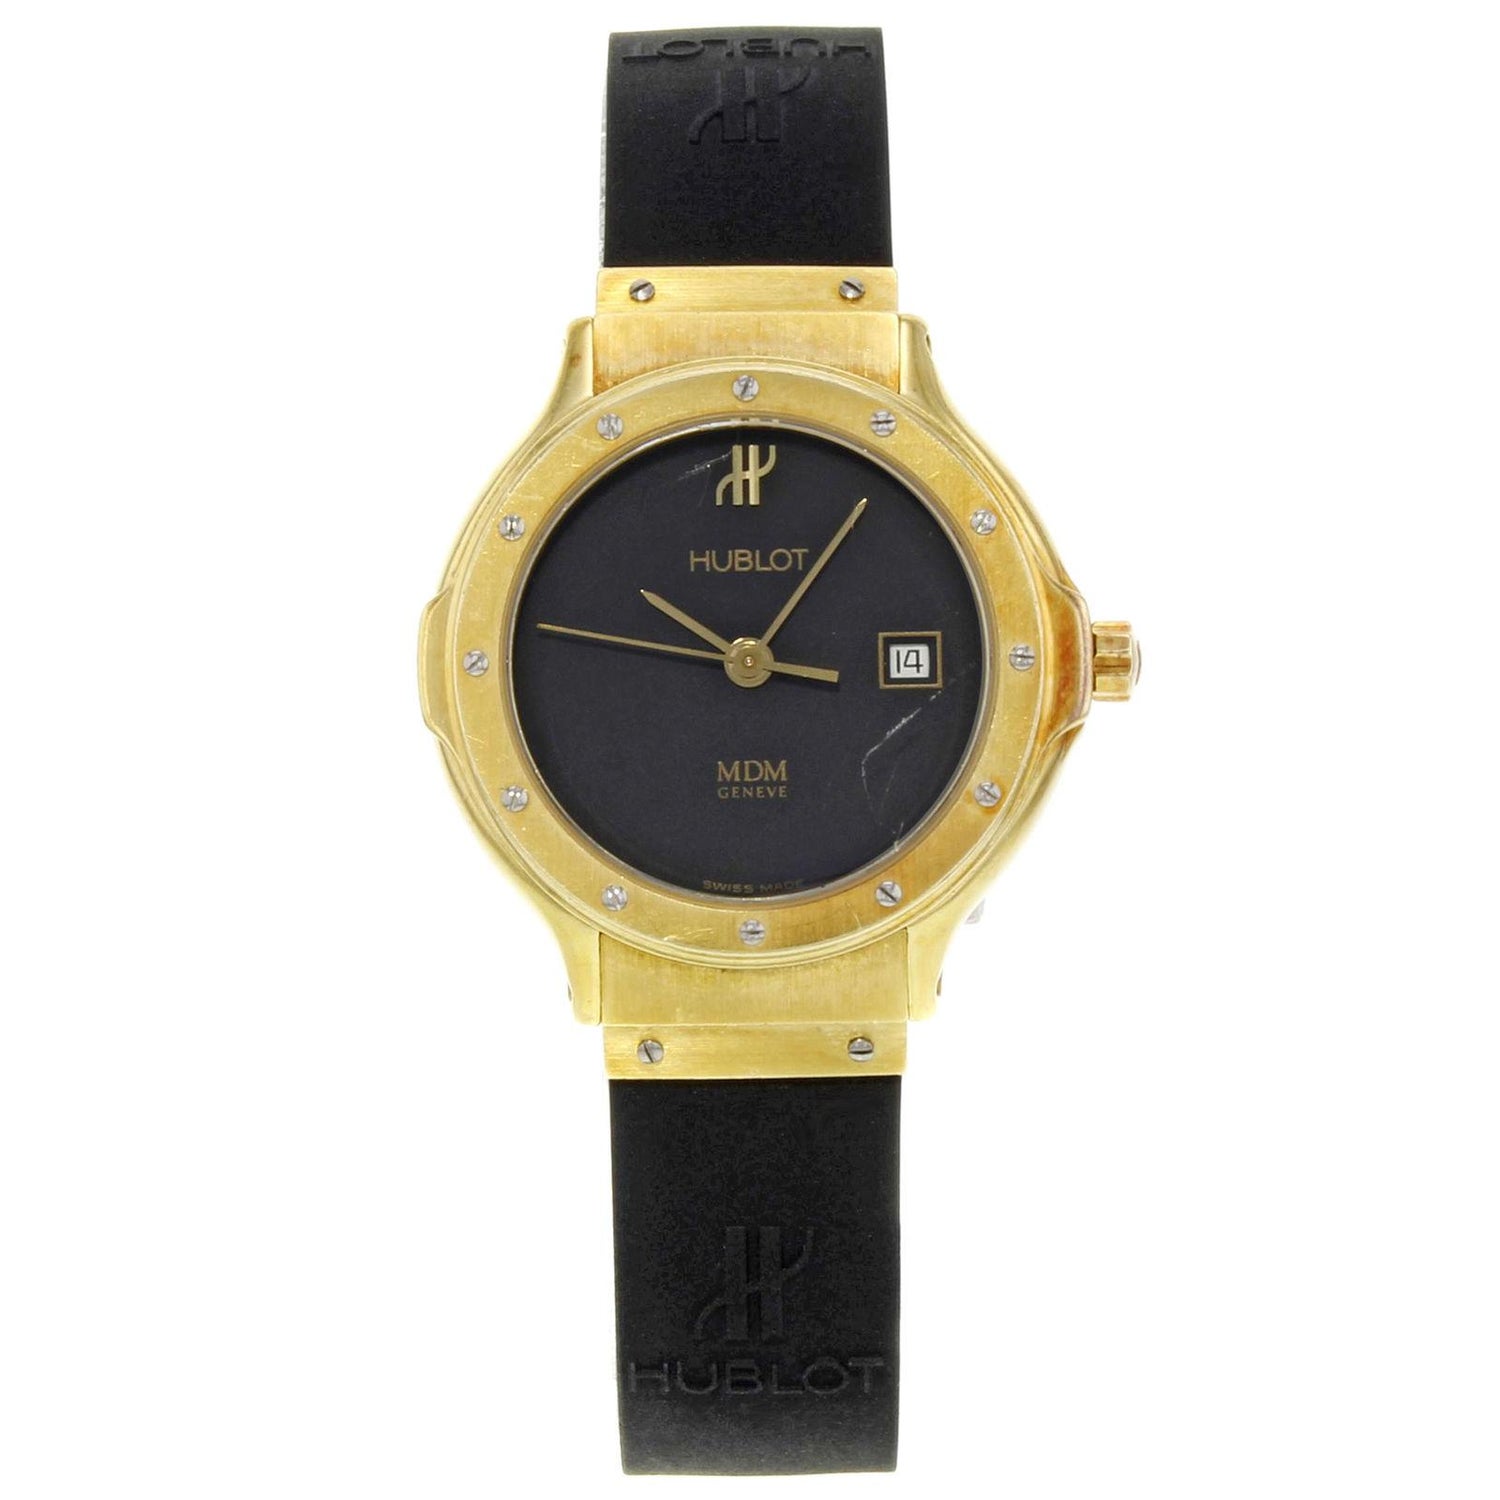 Hublot Geneve - For Sale on 1stDibs | hublot geneve watch, hublot geneve  price, hublot watch geneve